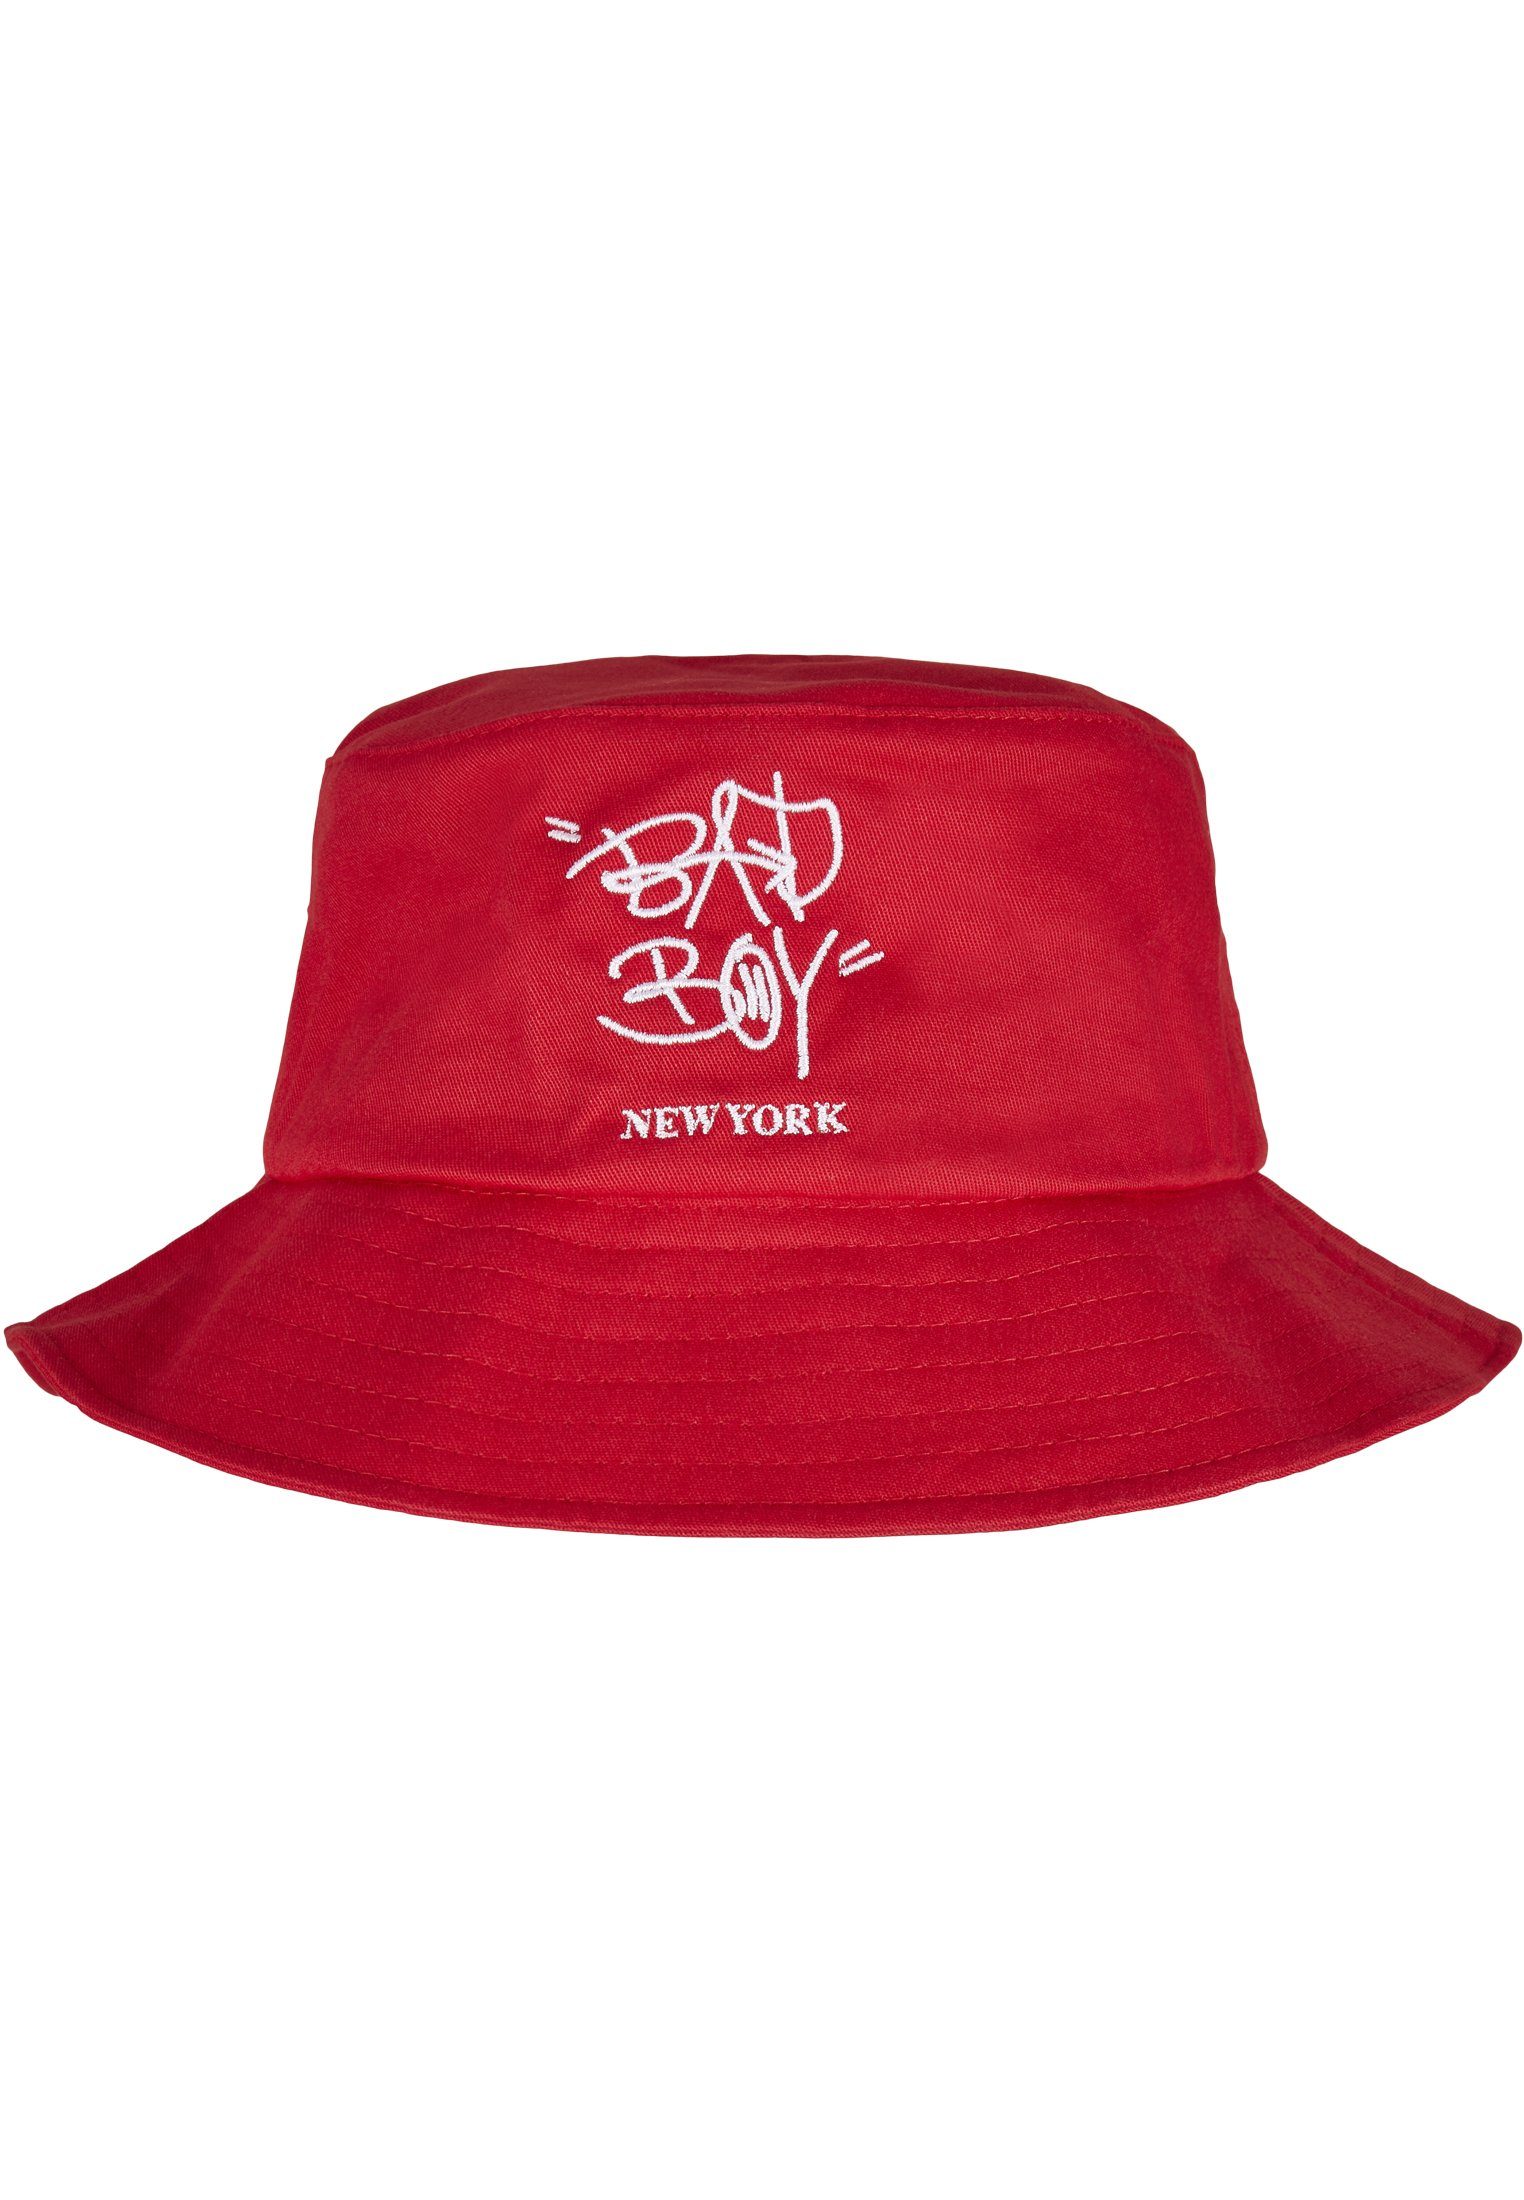 Offizielle japanische Versandhandelsseite MisterTee Snapback Cap Accessoires Bad Hat Bucket Boy